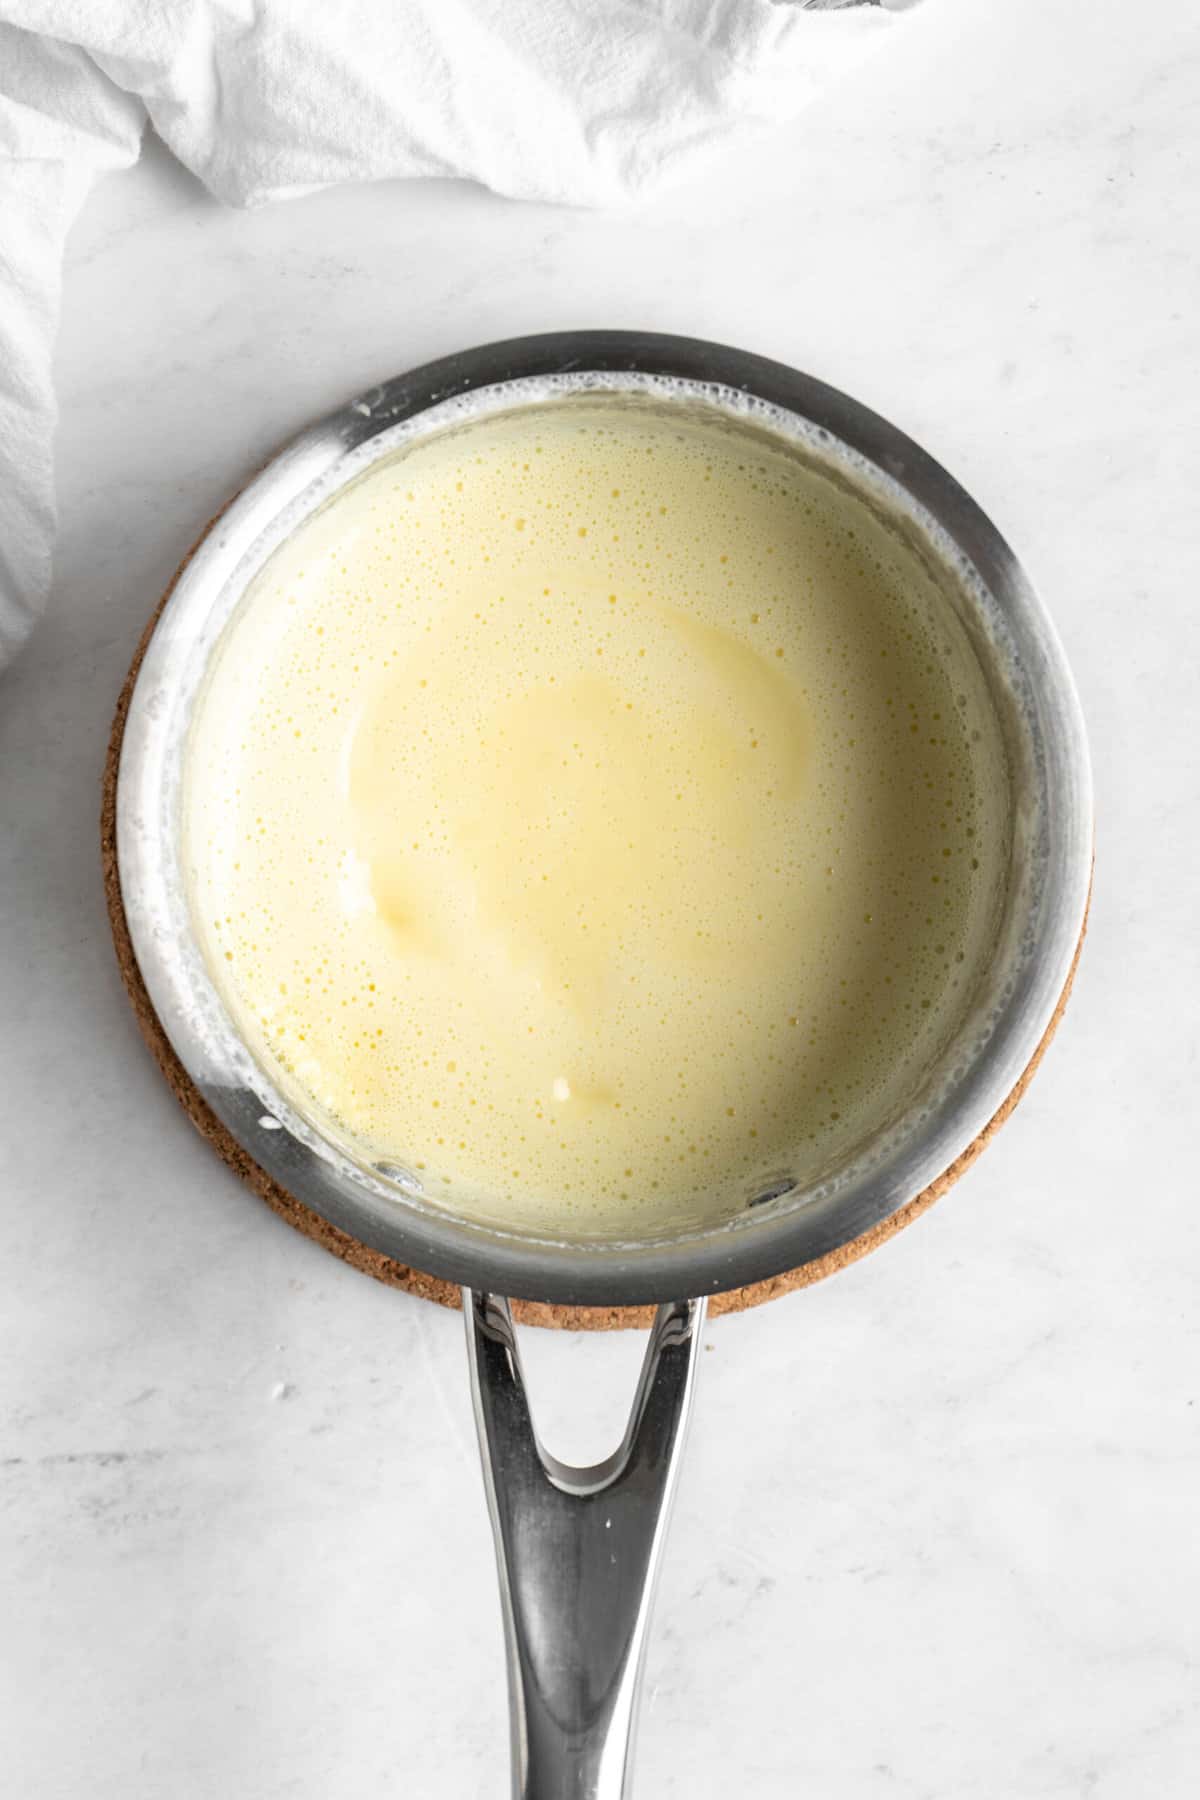 Creamy vanilla icing in a small saucepan.